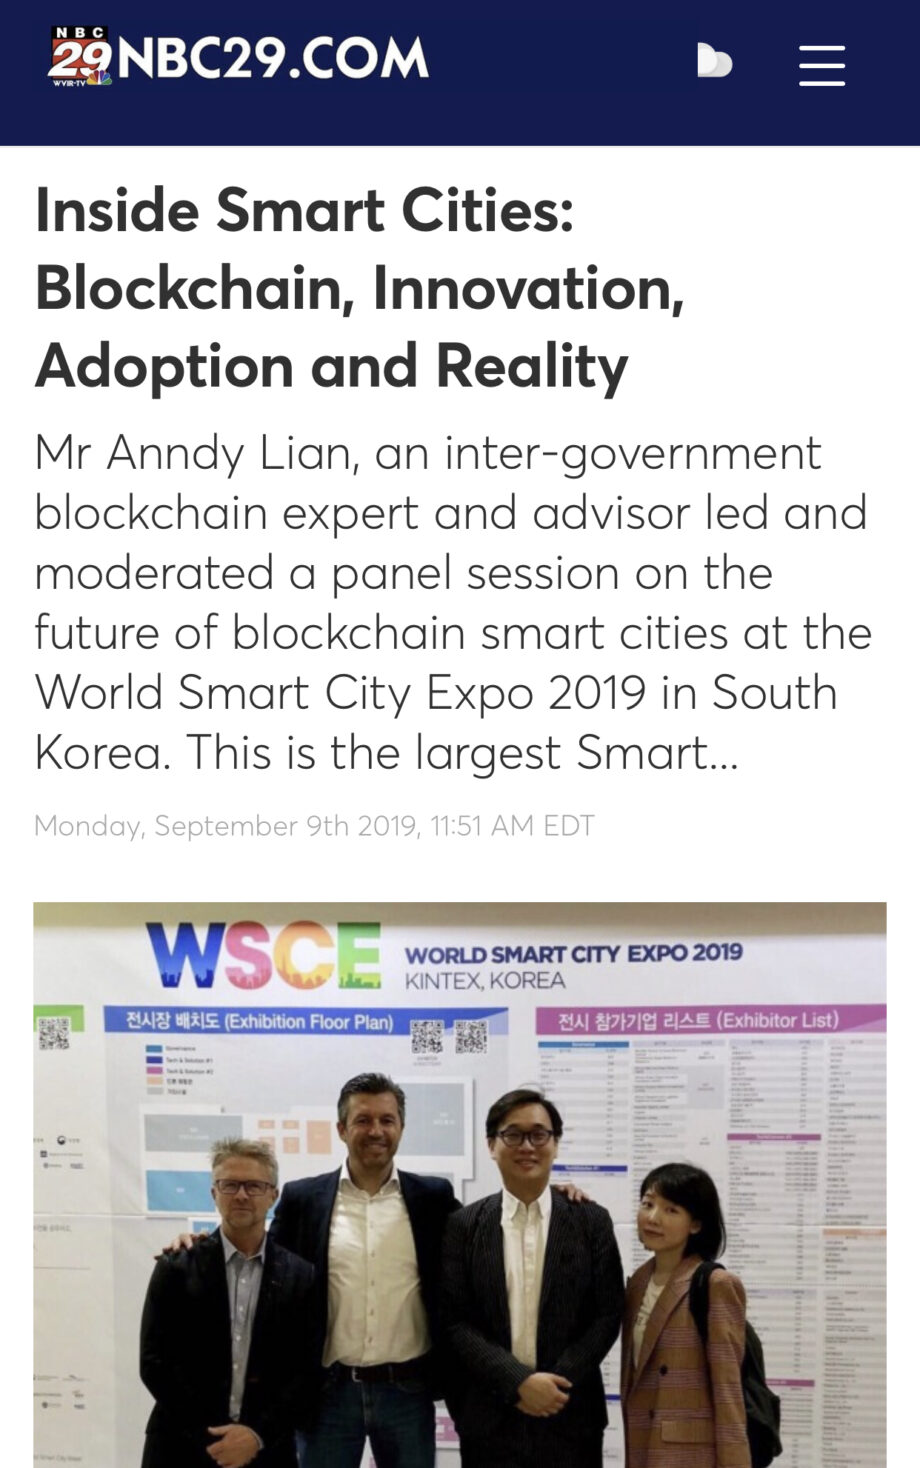 NBC News: Anndy Lian spoke at the World Smart City Expo 2019 in South Korea